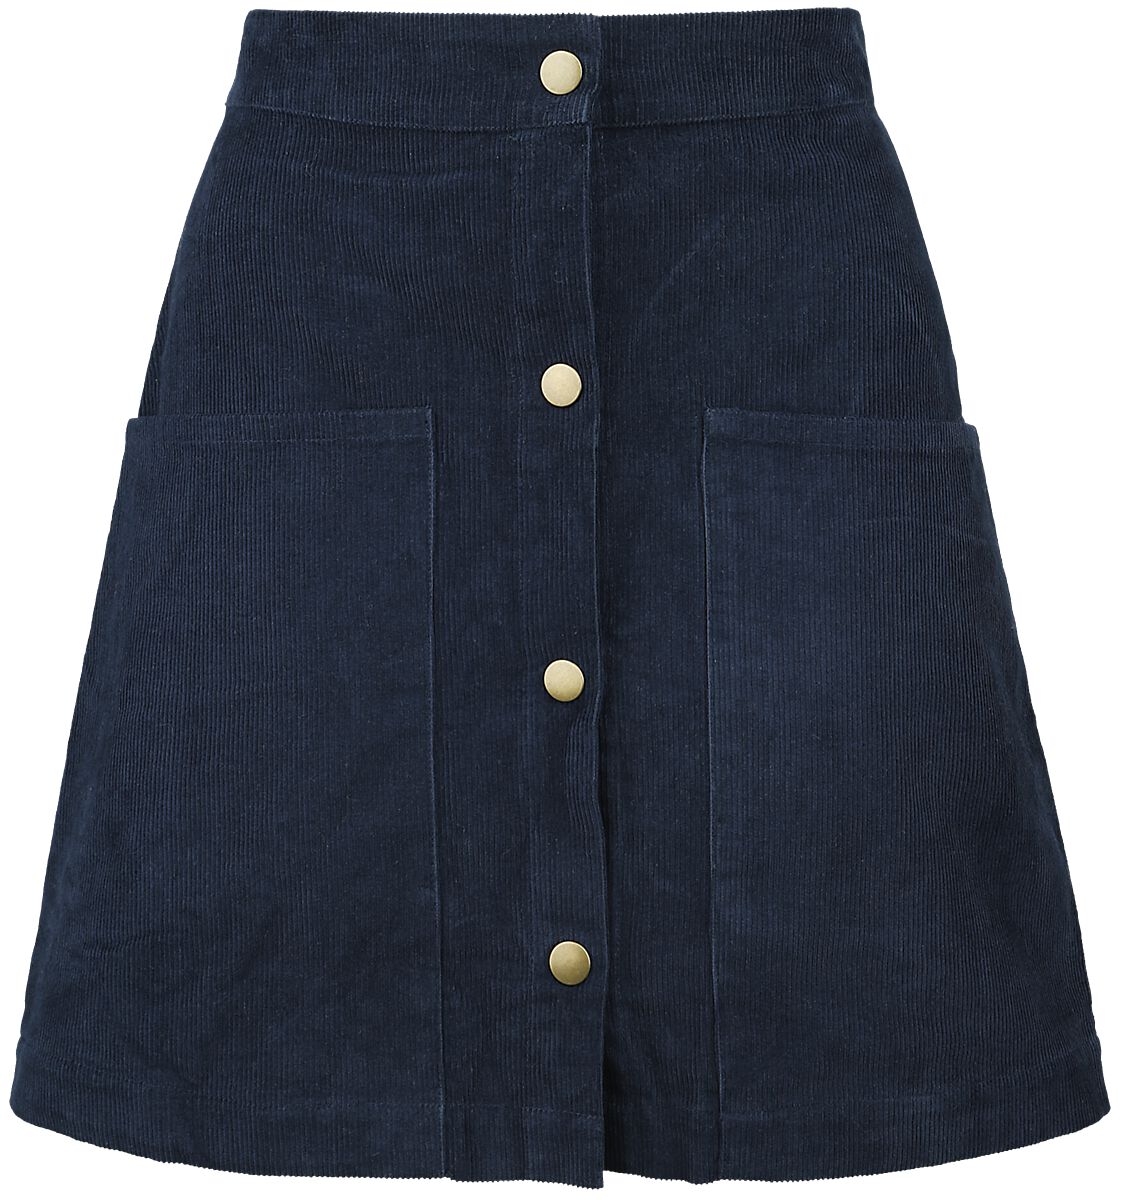 Timeless London Kurzer Rock - Moxy Skirt - XS bis XL - für Damen - Größe S - blau